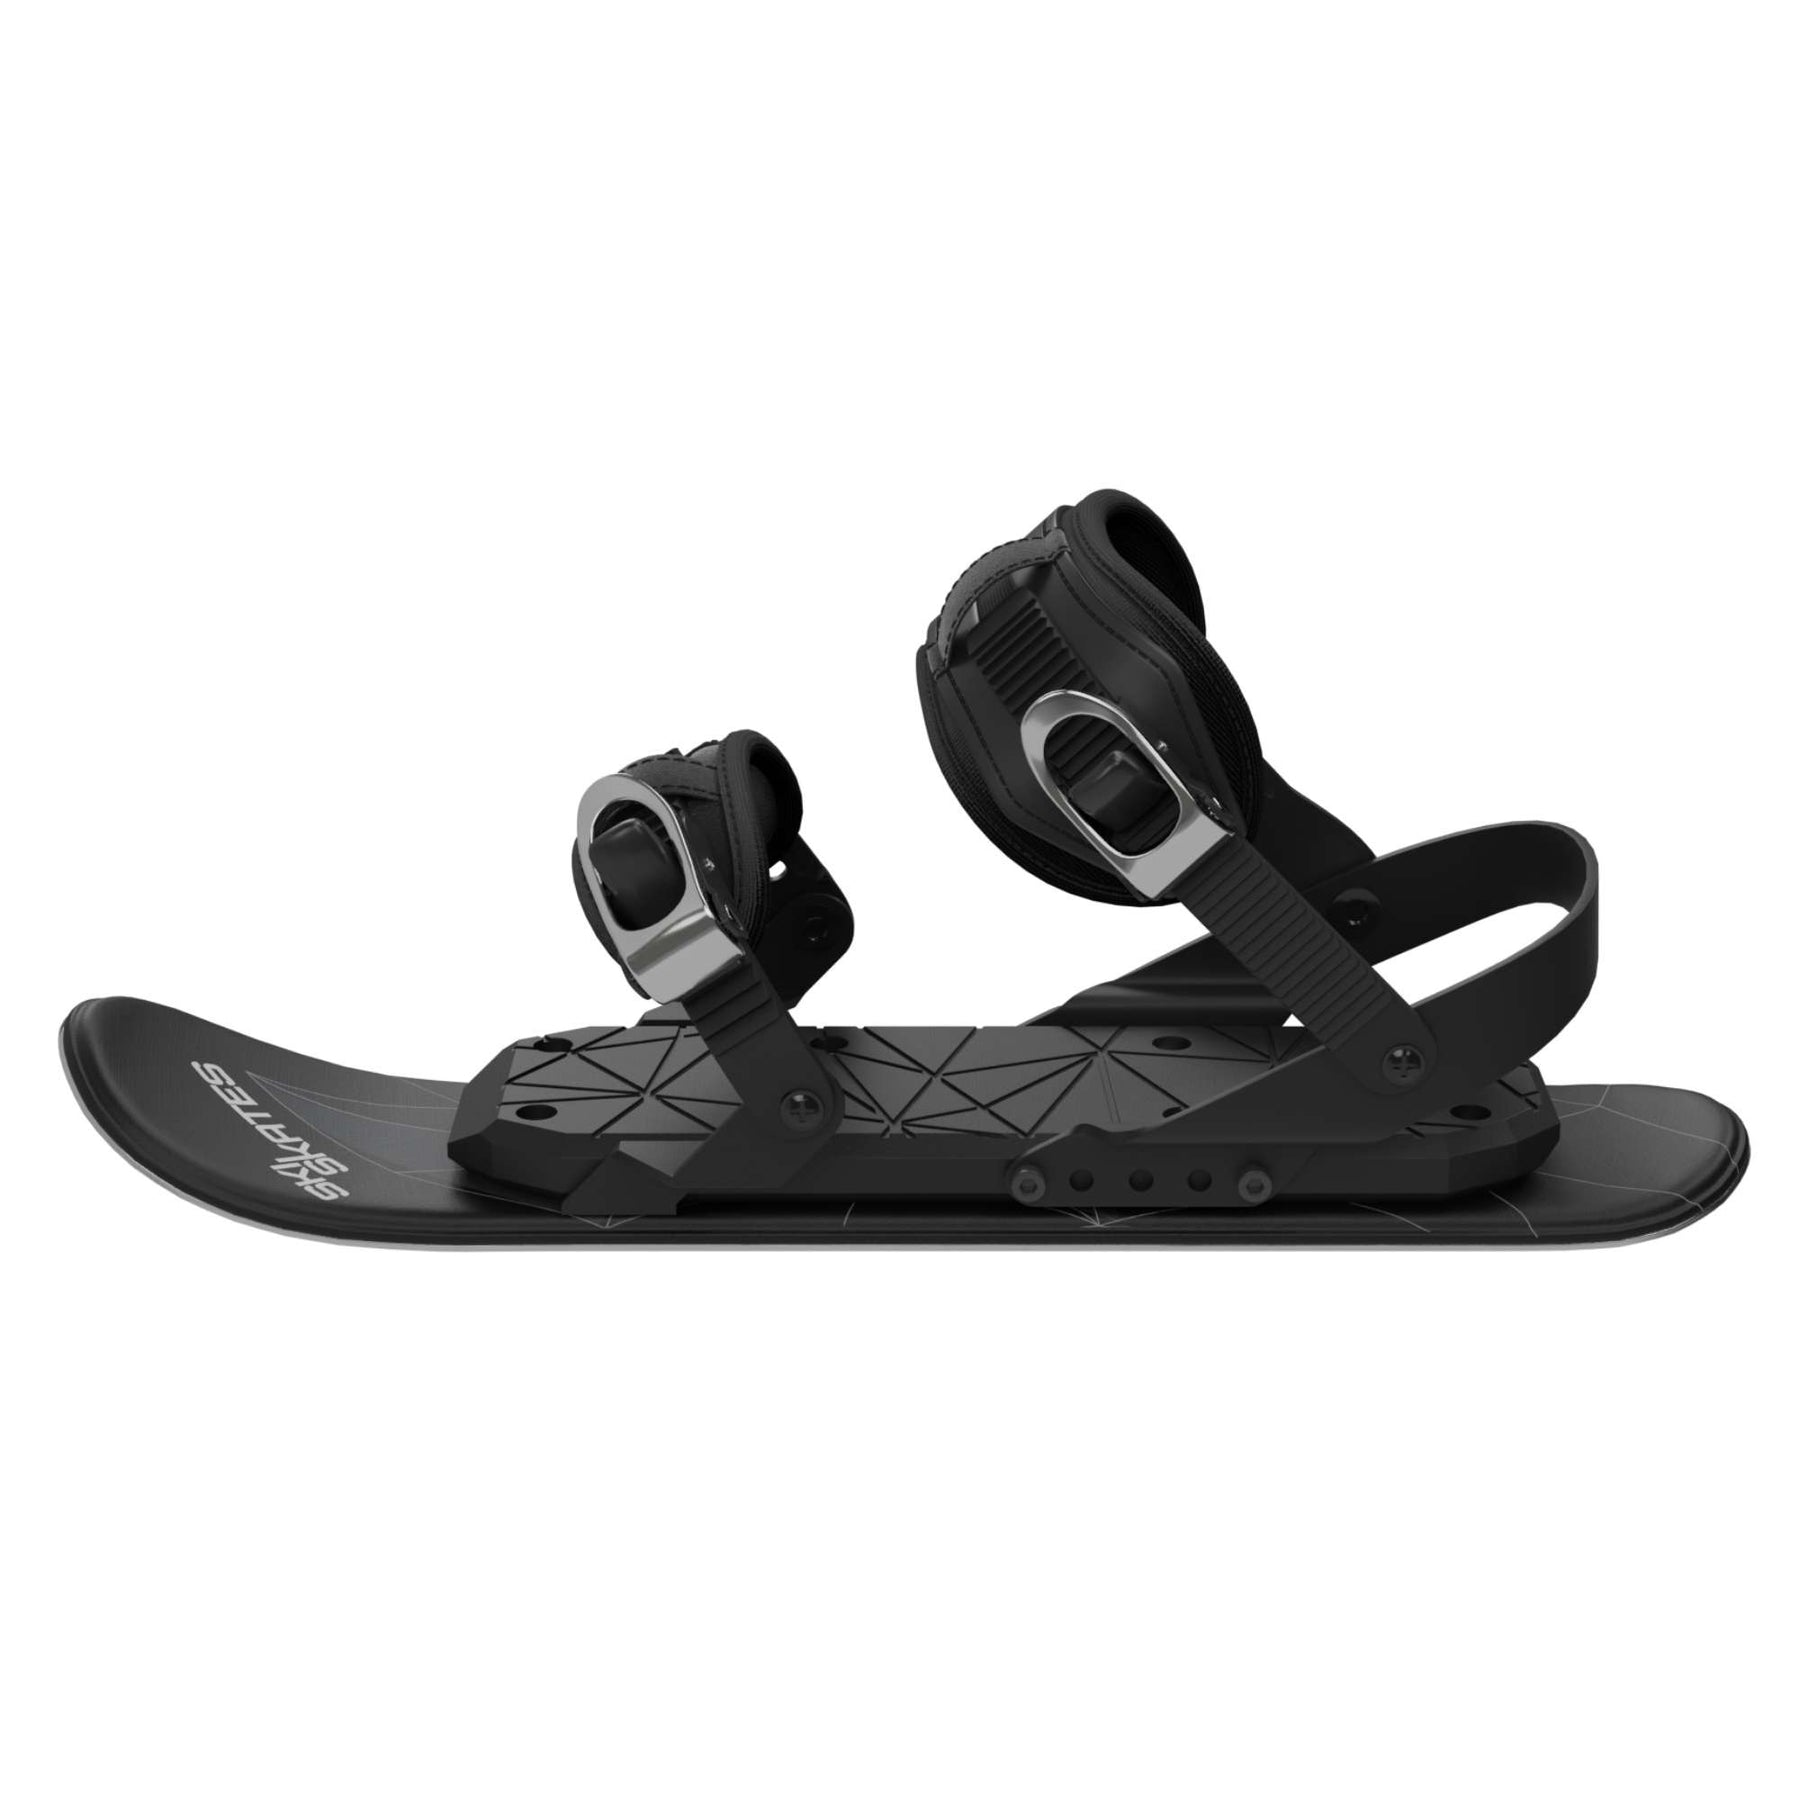 Skiskates - Mini Ski Skates | Snowboard Boots Model - Official Product ...